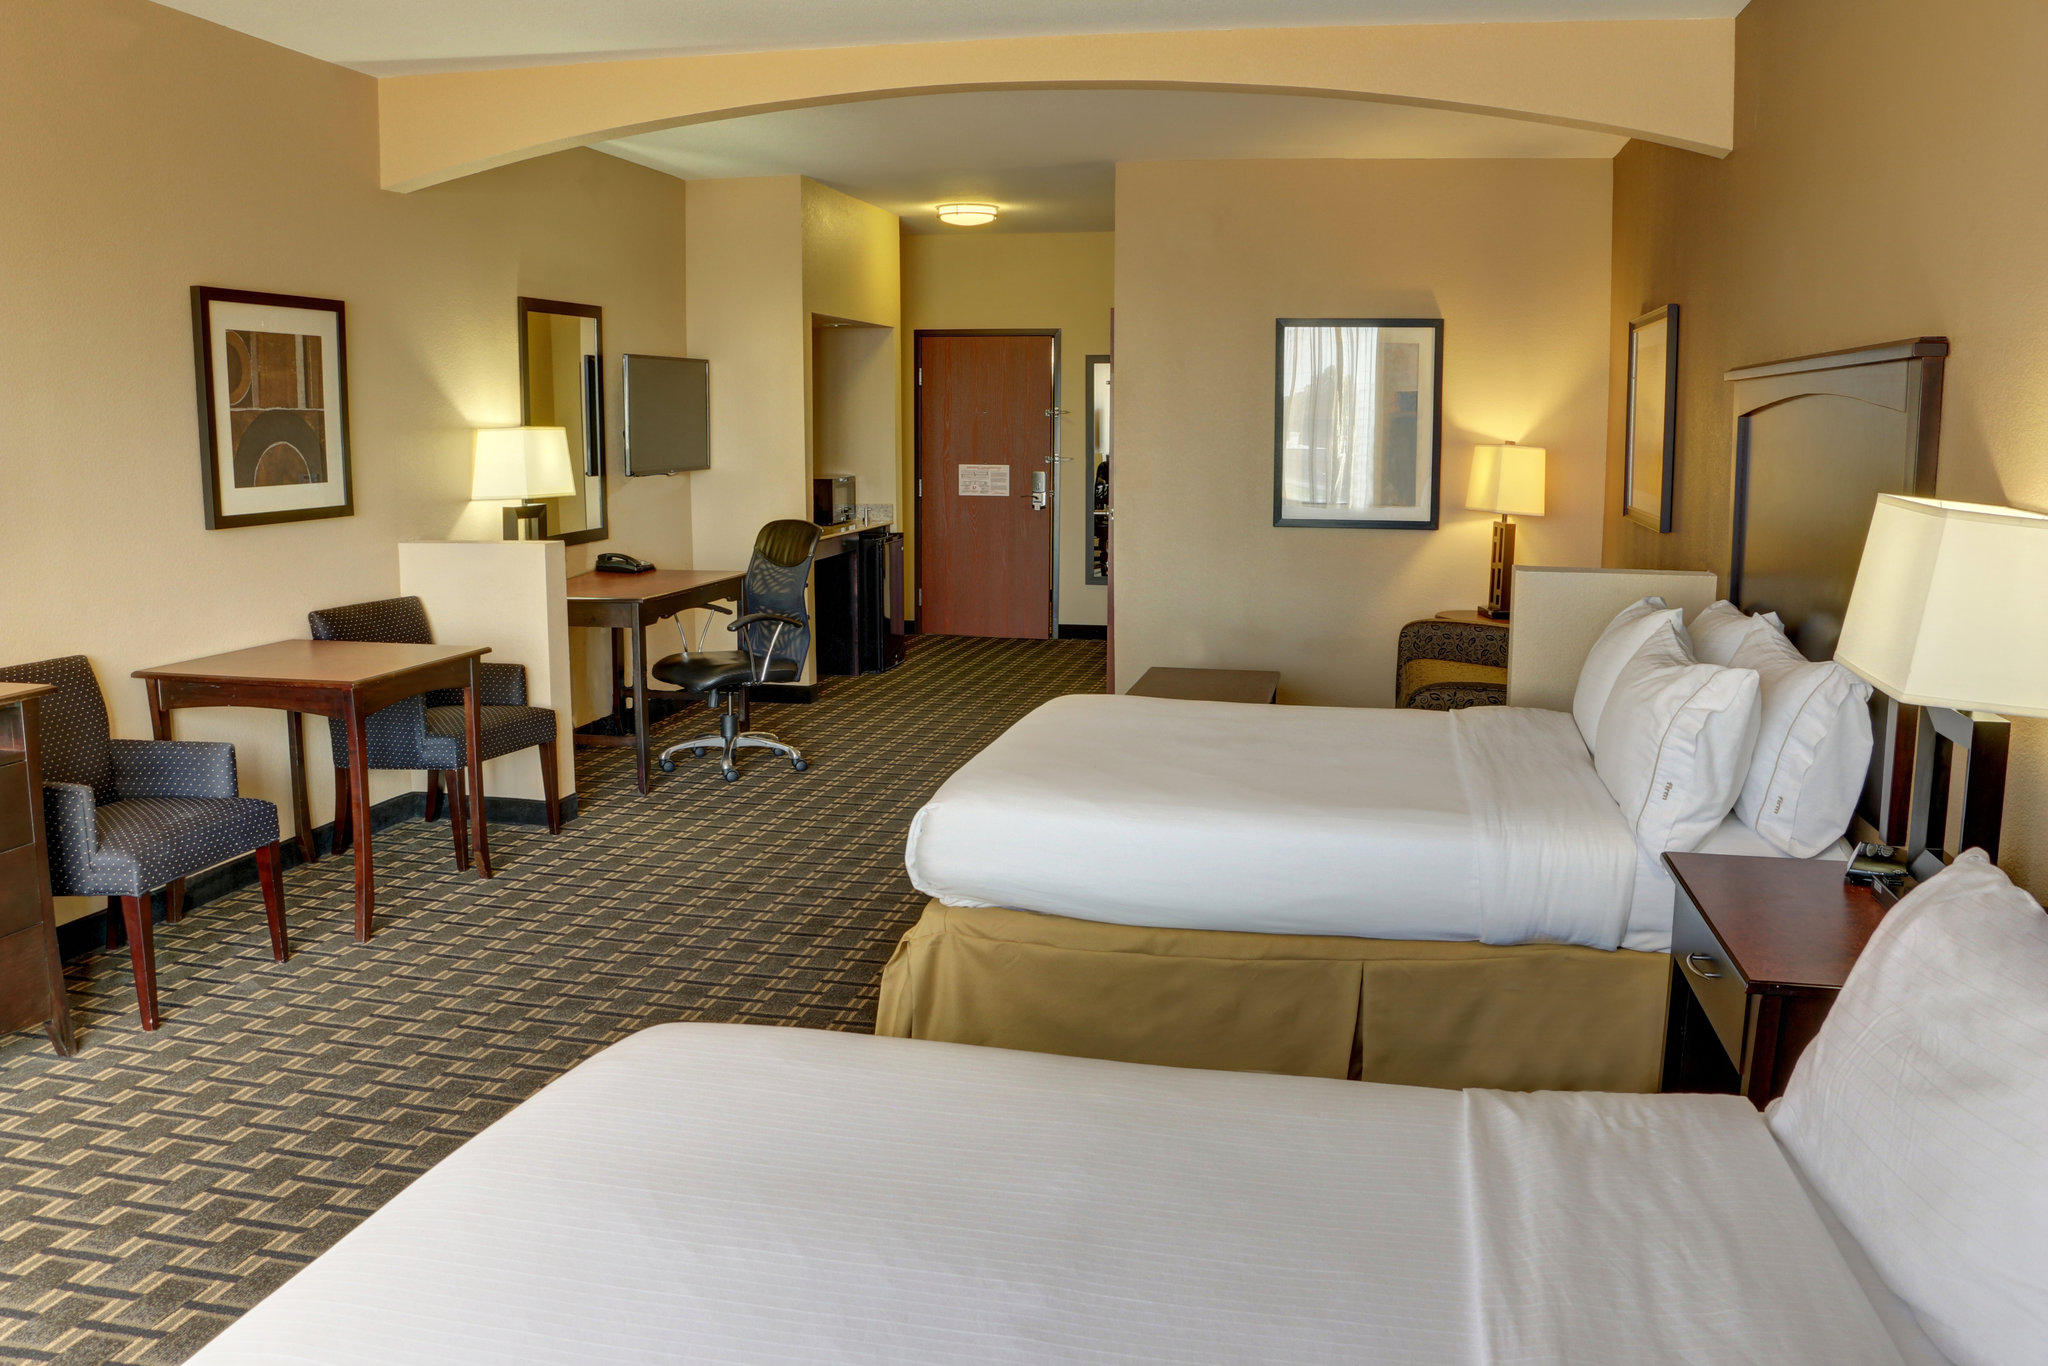 Holiday Inn Express & Suites Texarkana East Photo